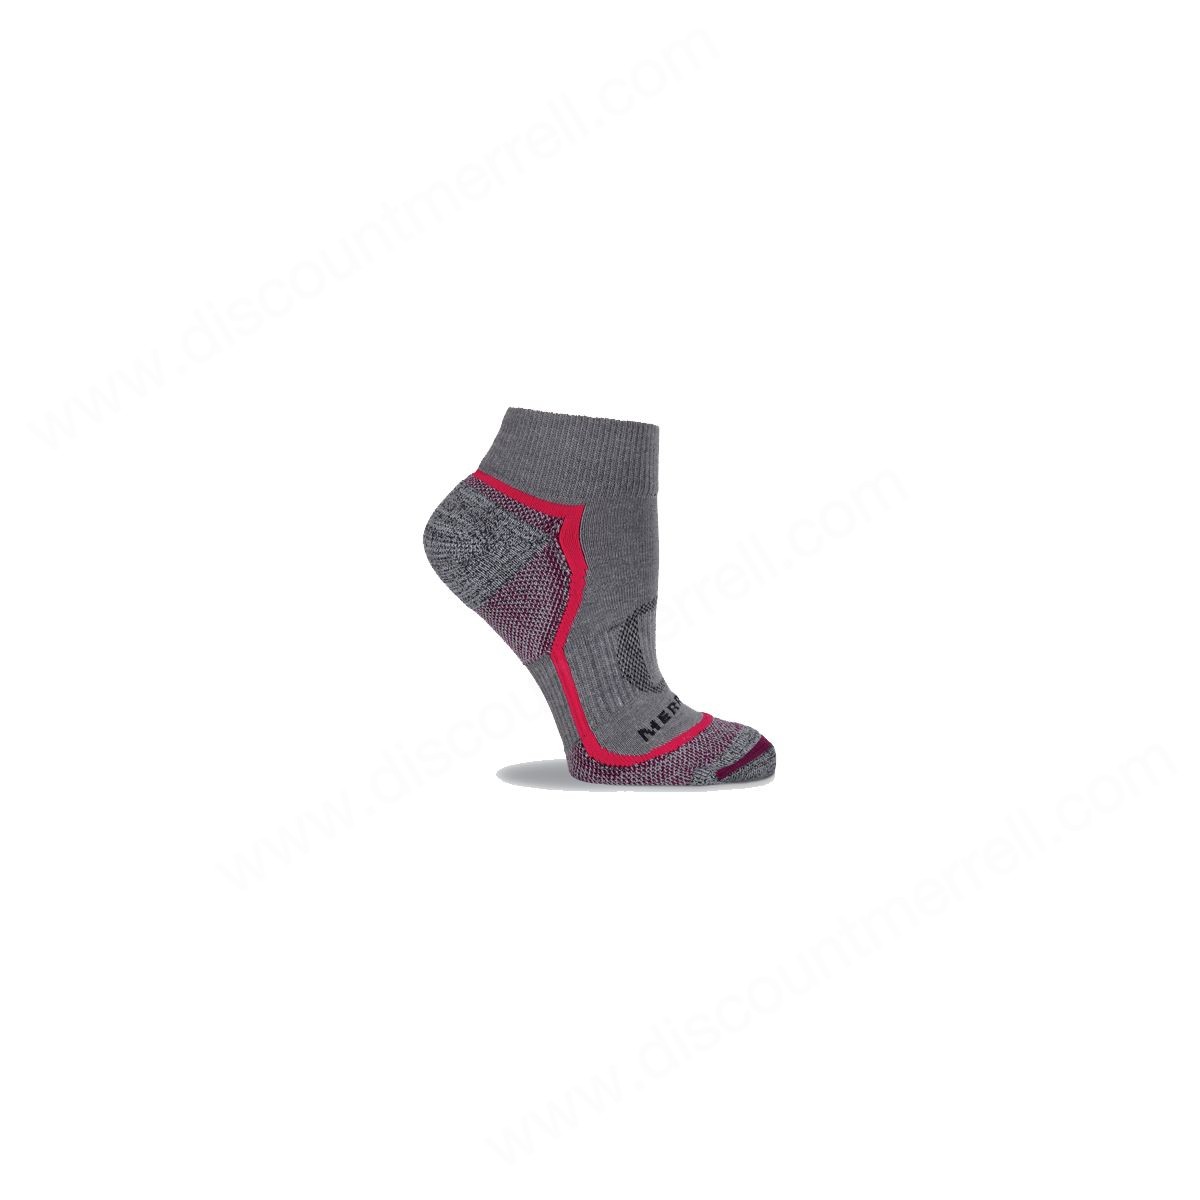 Merrell Womens's Trail Glove Quarter Sock Charcoal - -0